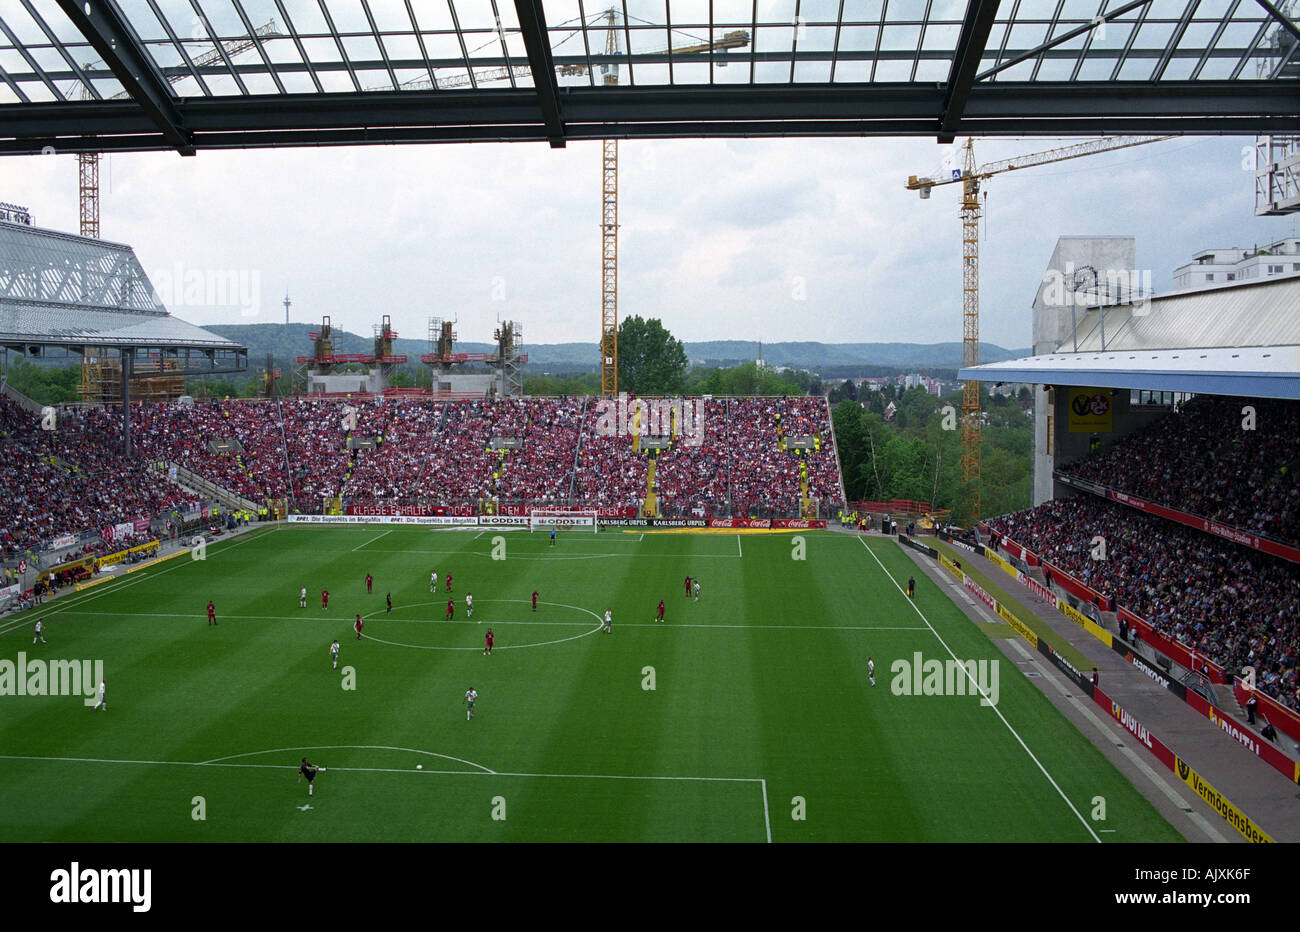 Fritz-Walter-Stadion, home of Kaiserslautern football club, Germany. Stock Photo